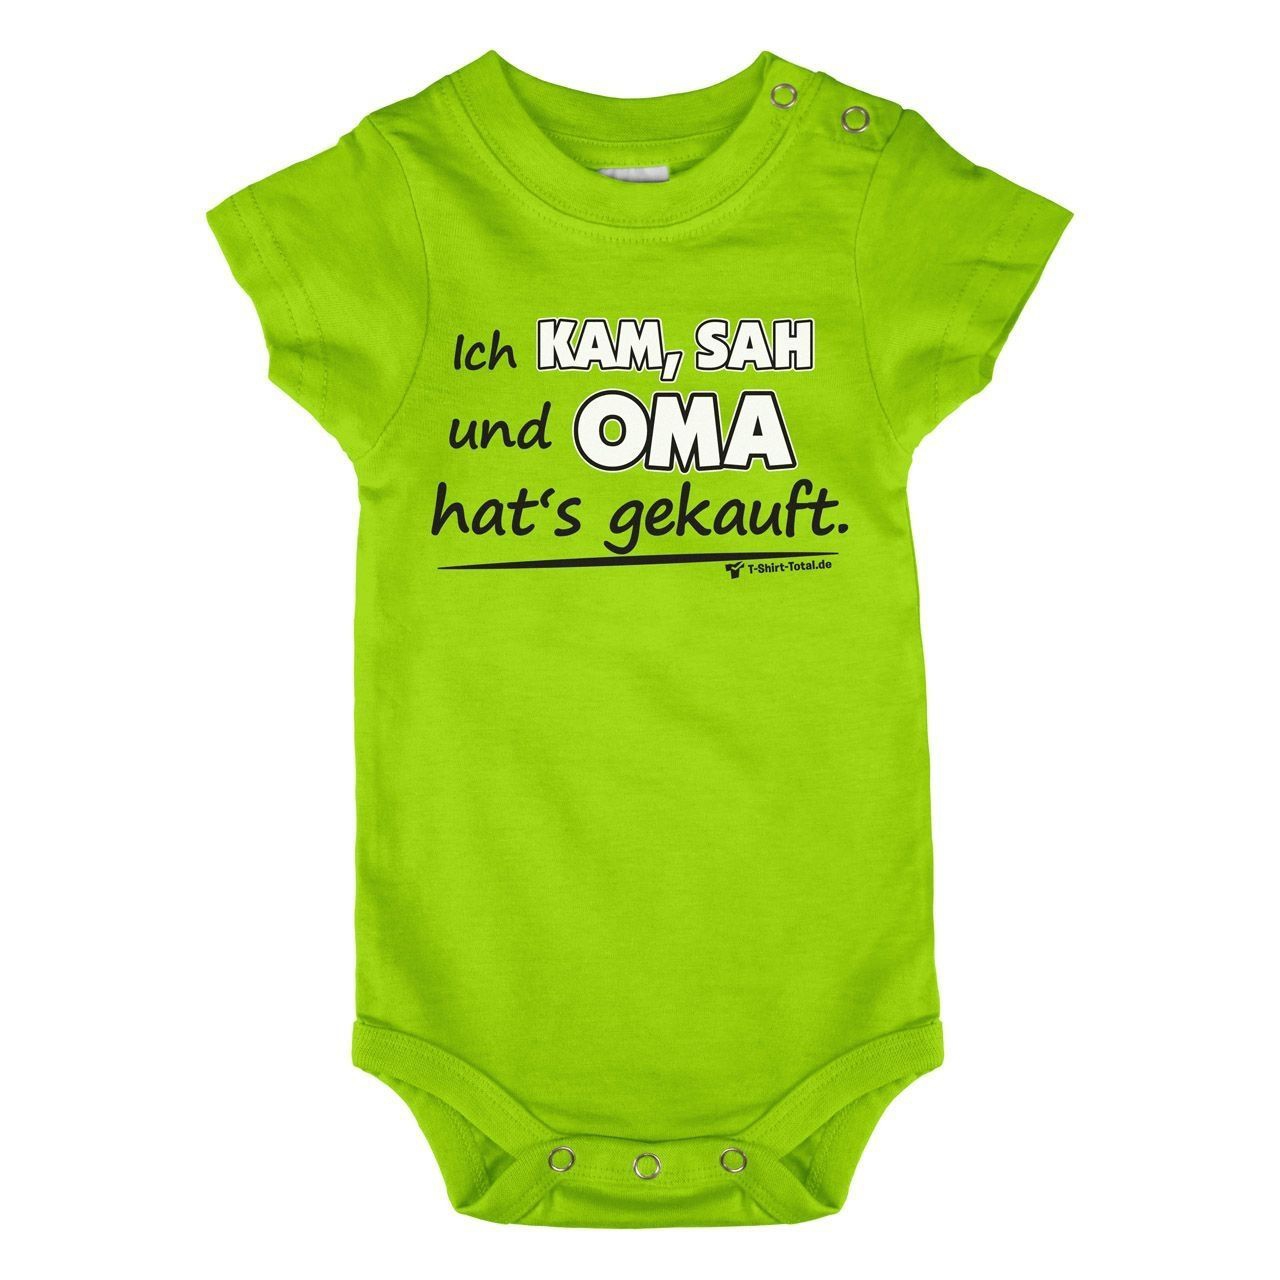 Oma hats gekauft Baby Body Kurzarm hellgrün 56 / 62